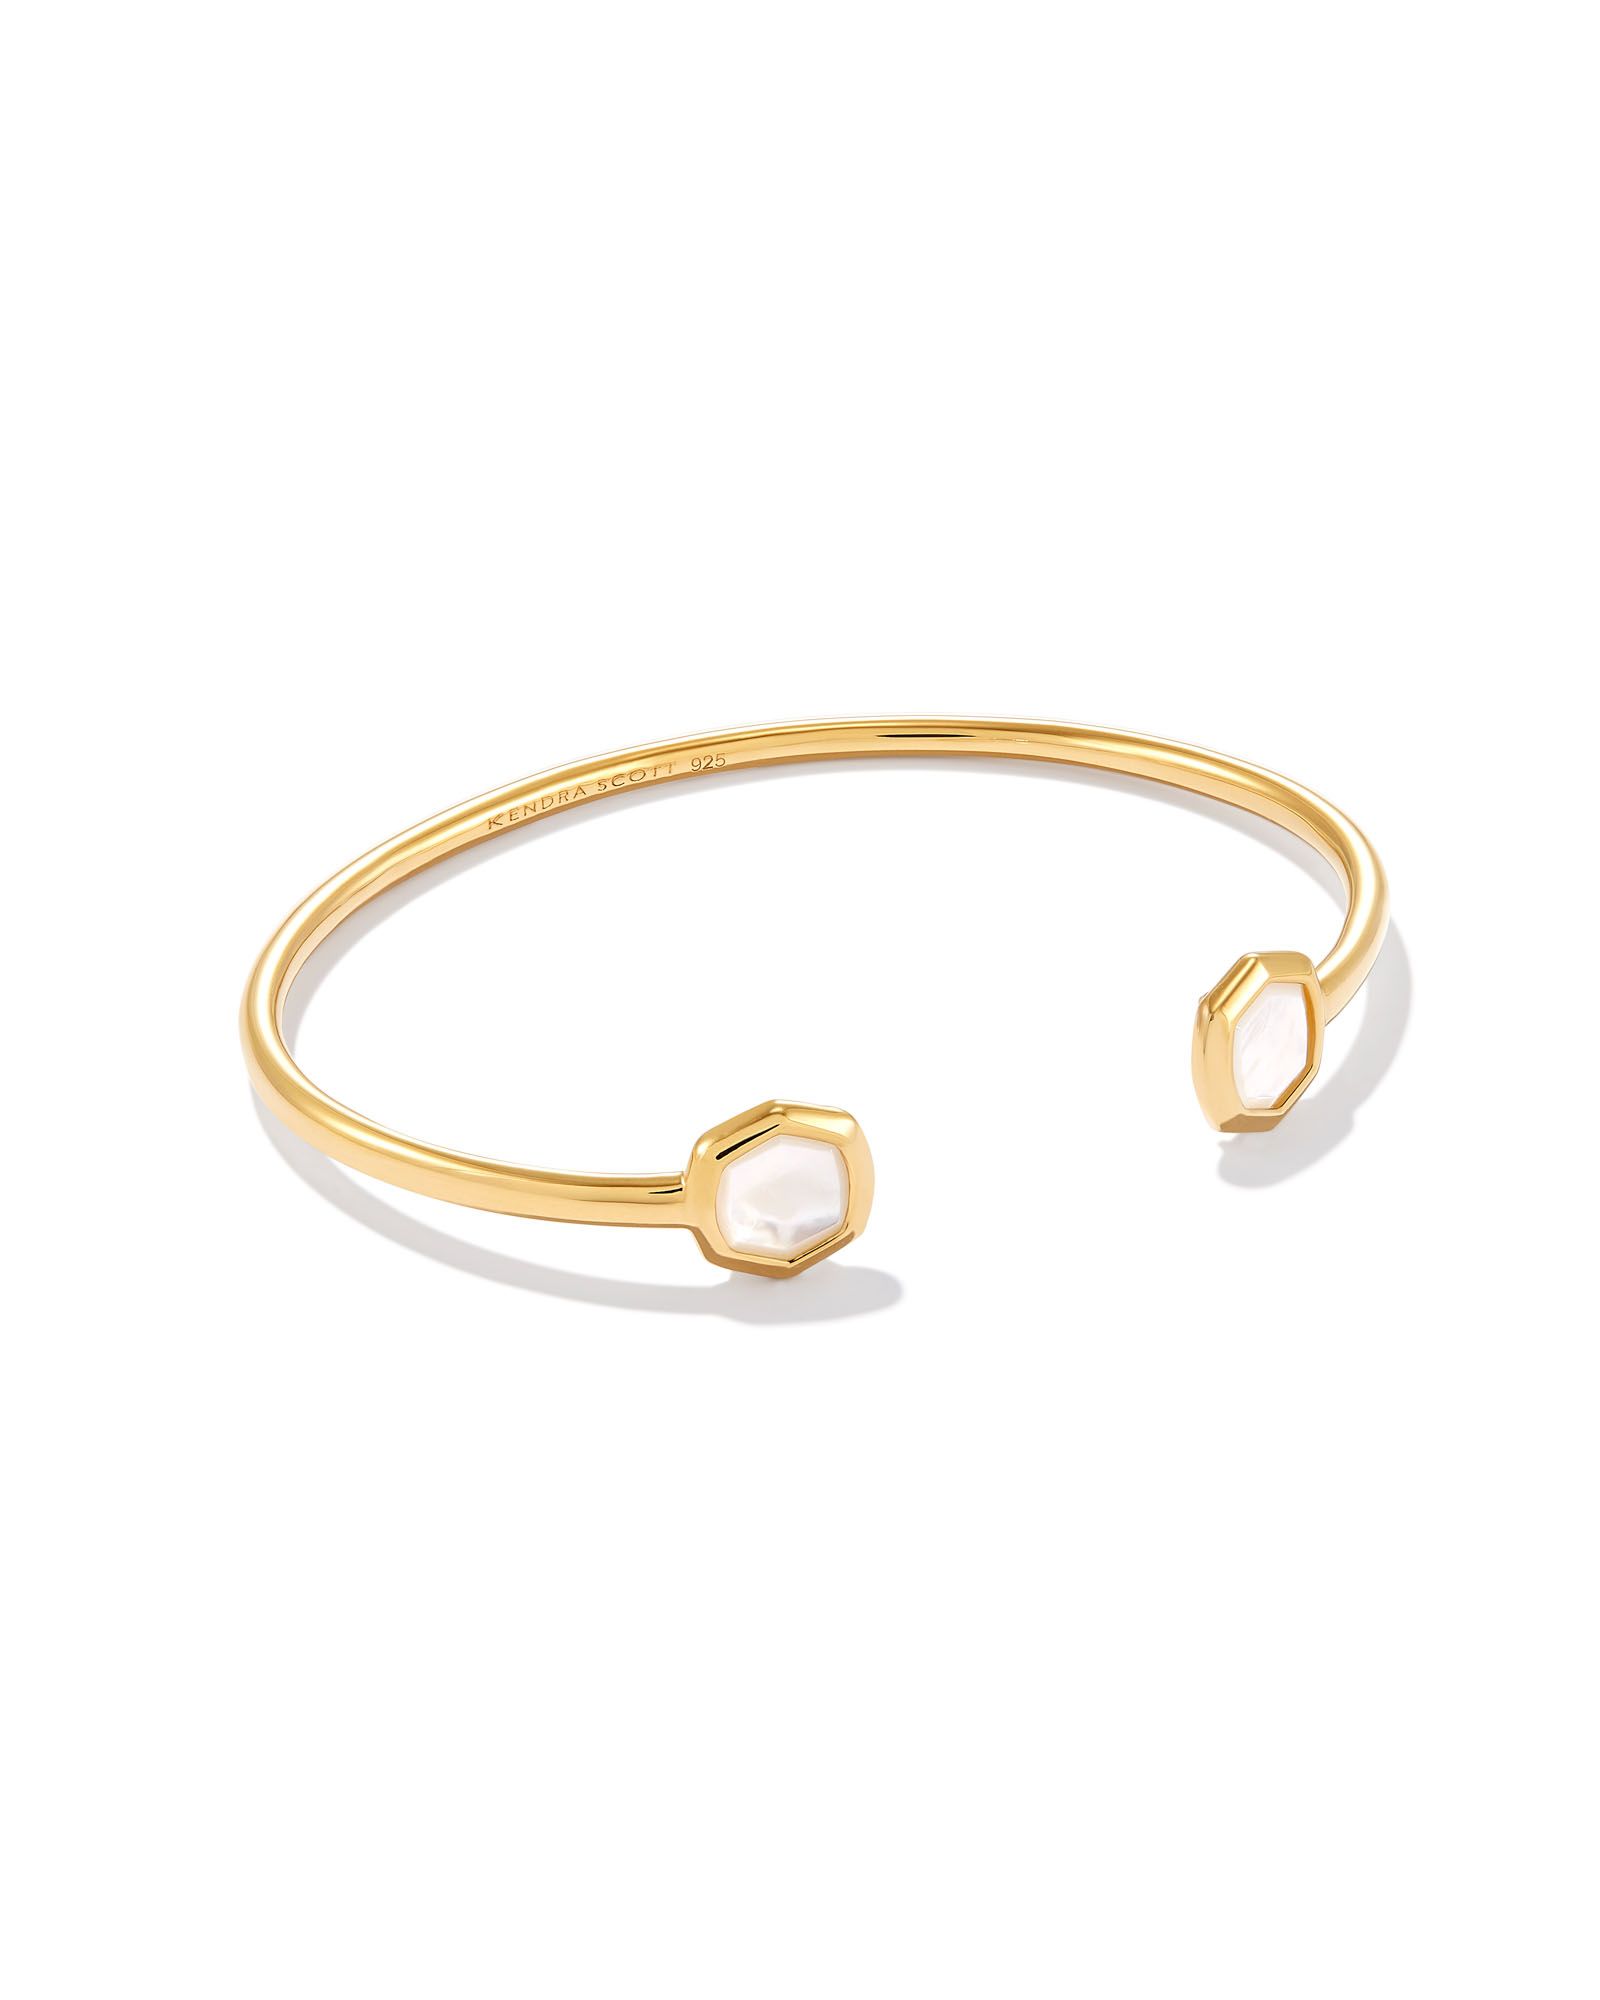 Davis 18k Gold Vermeil Small Cuff Bracelet in Ivory Mother-Of-Pearl | Kendra Scott | Kendra Scott